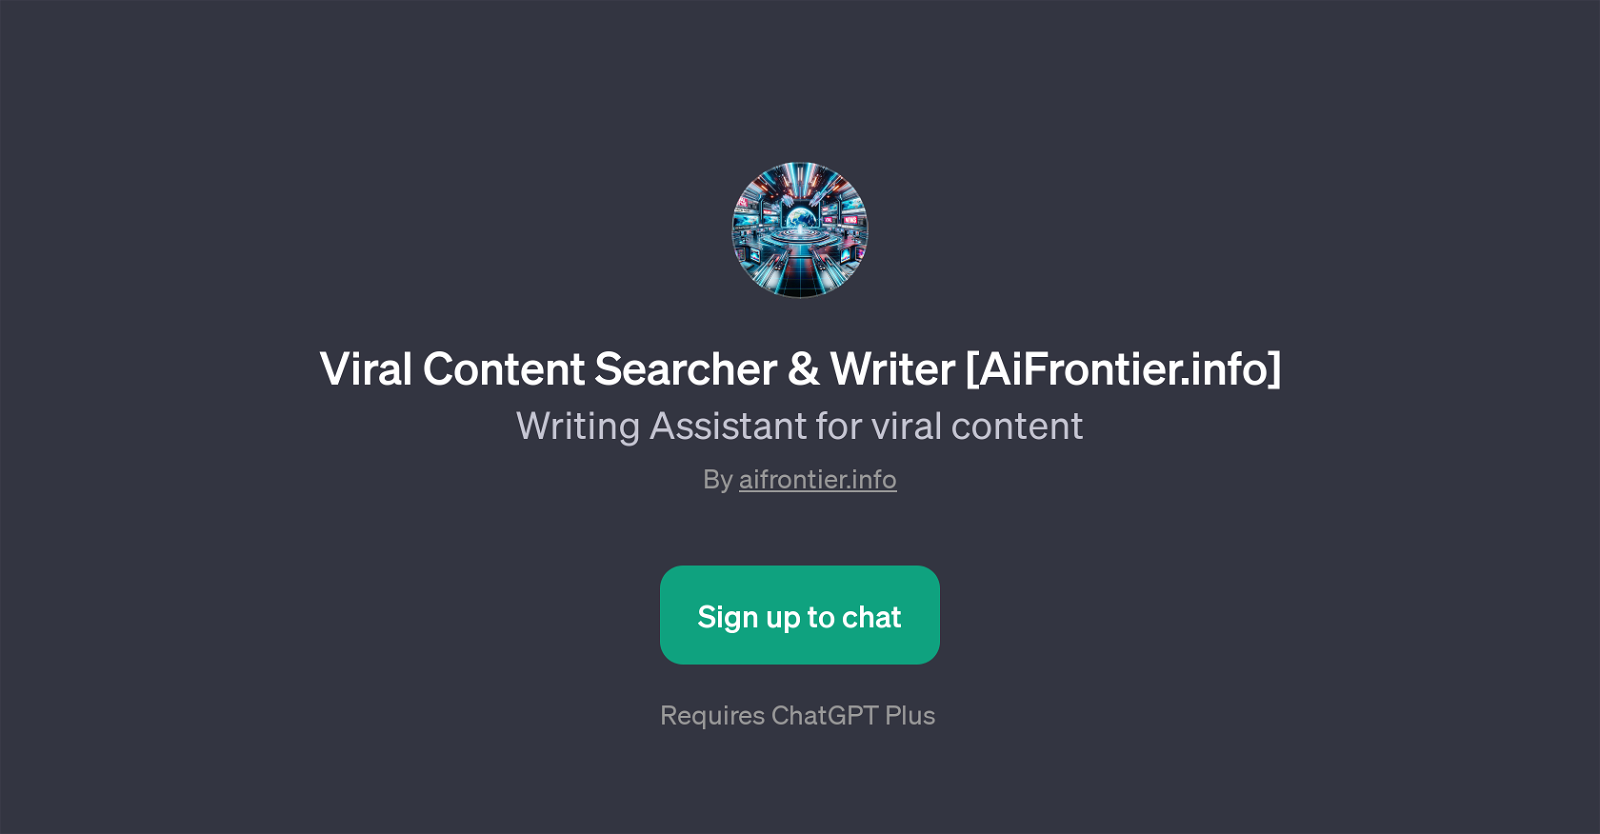 Viral Content Searcher & Writer website